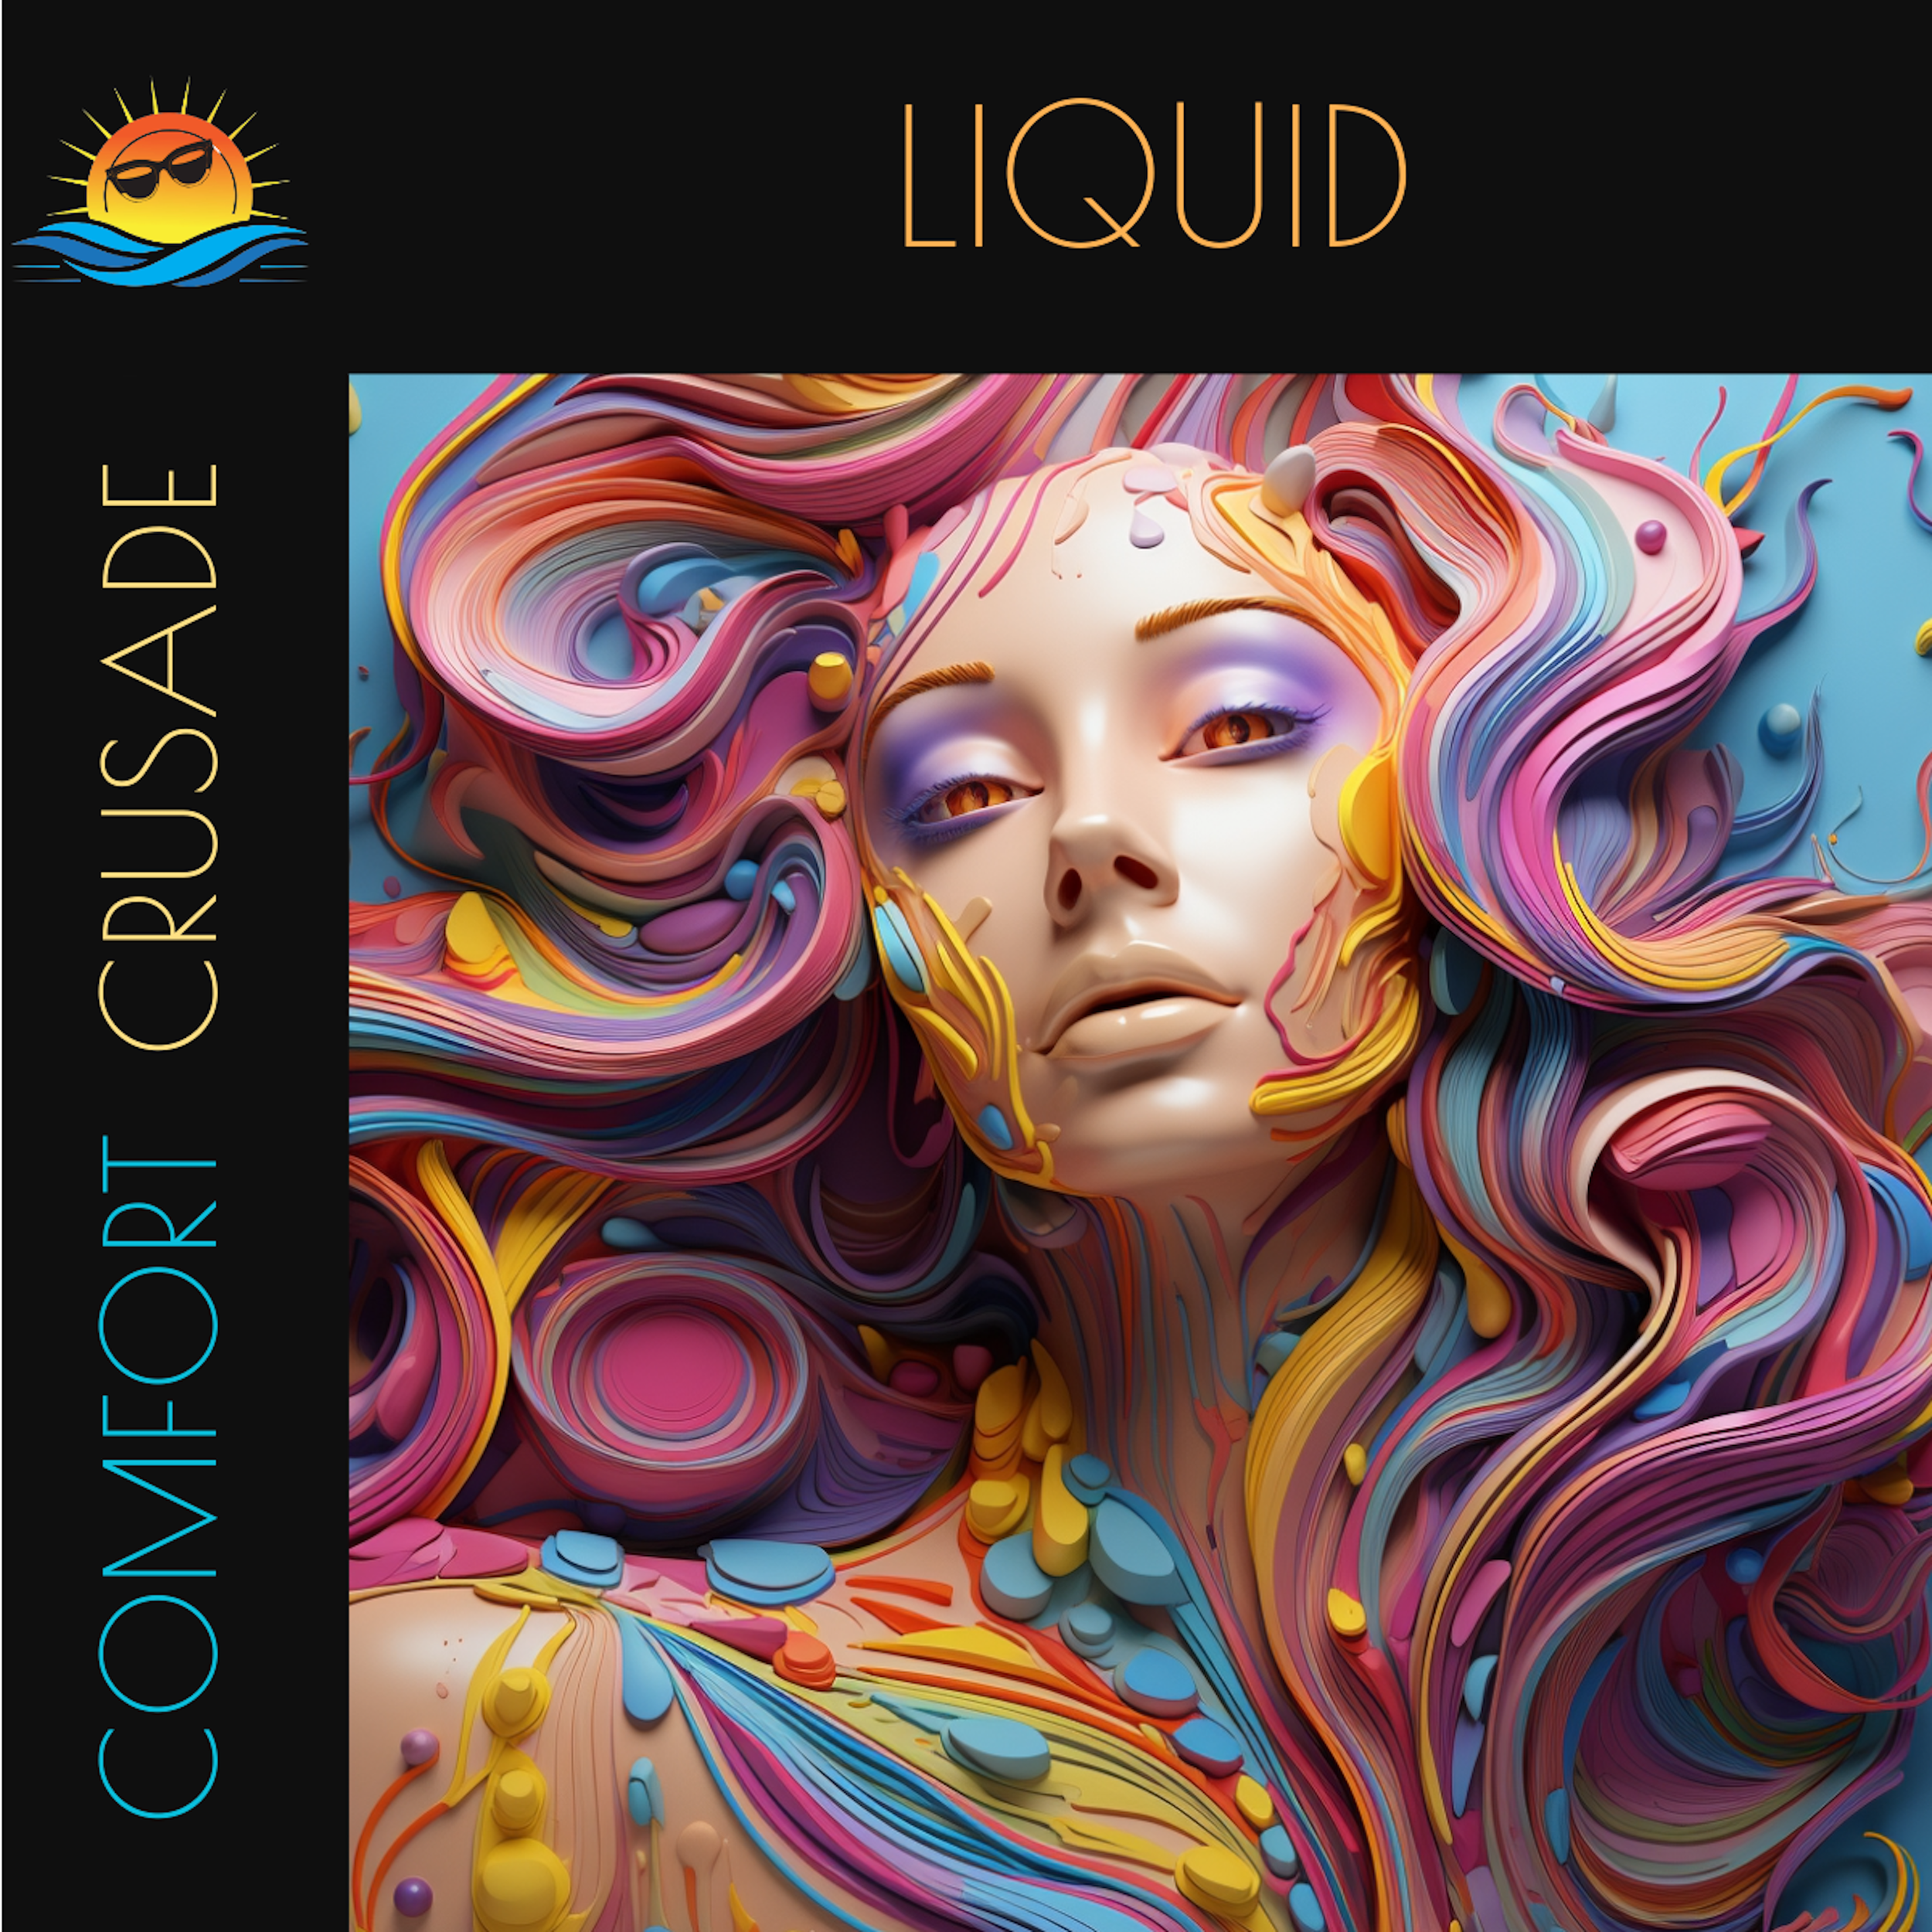 Liquid by Comfort Crusade